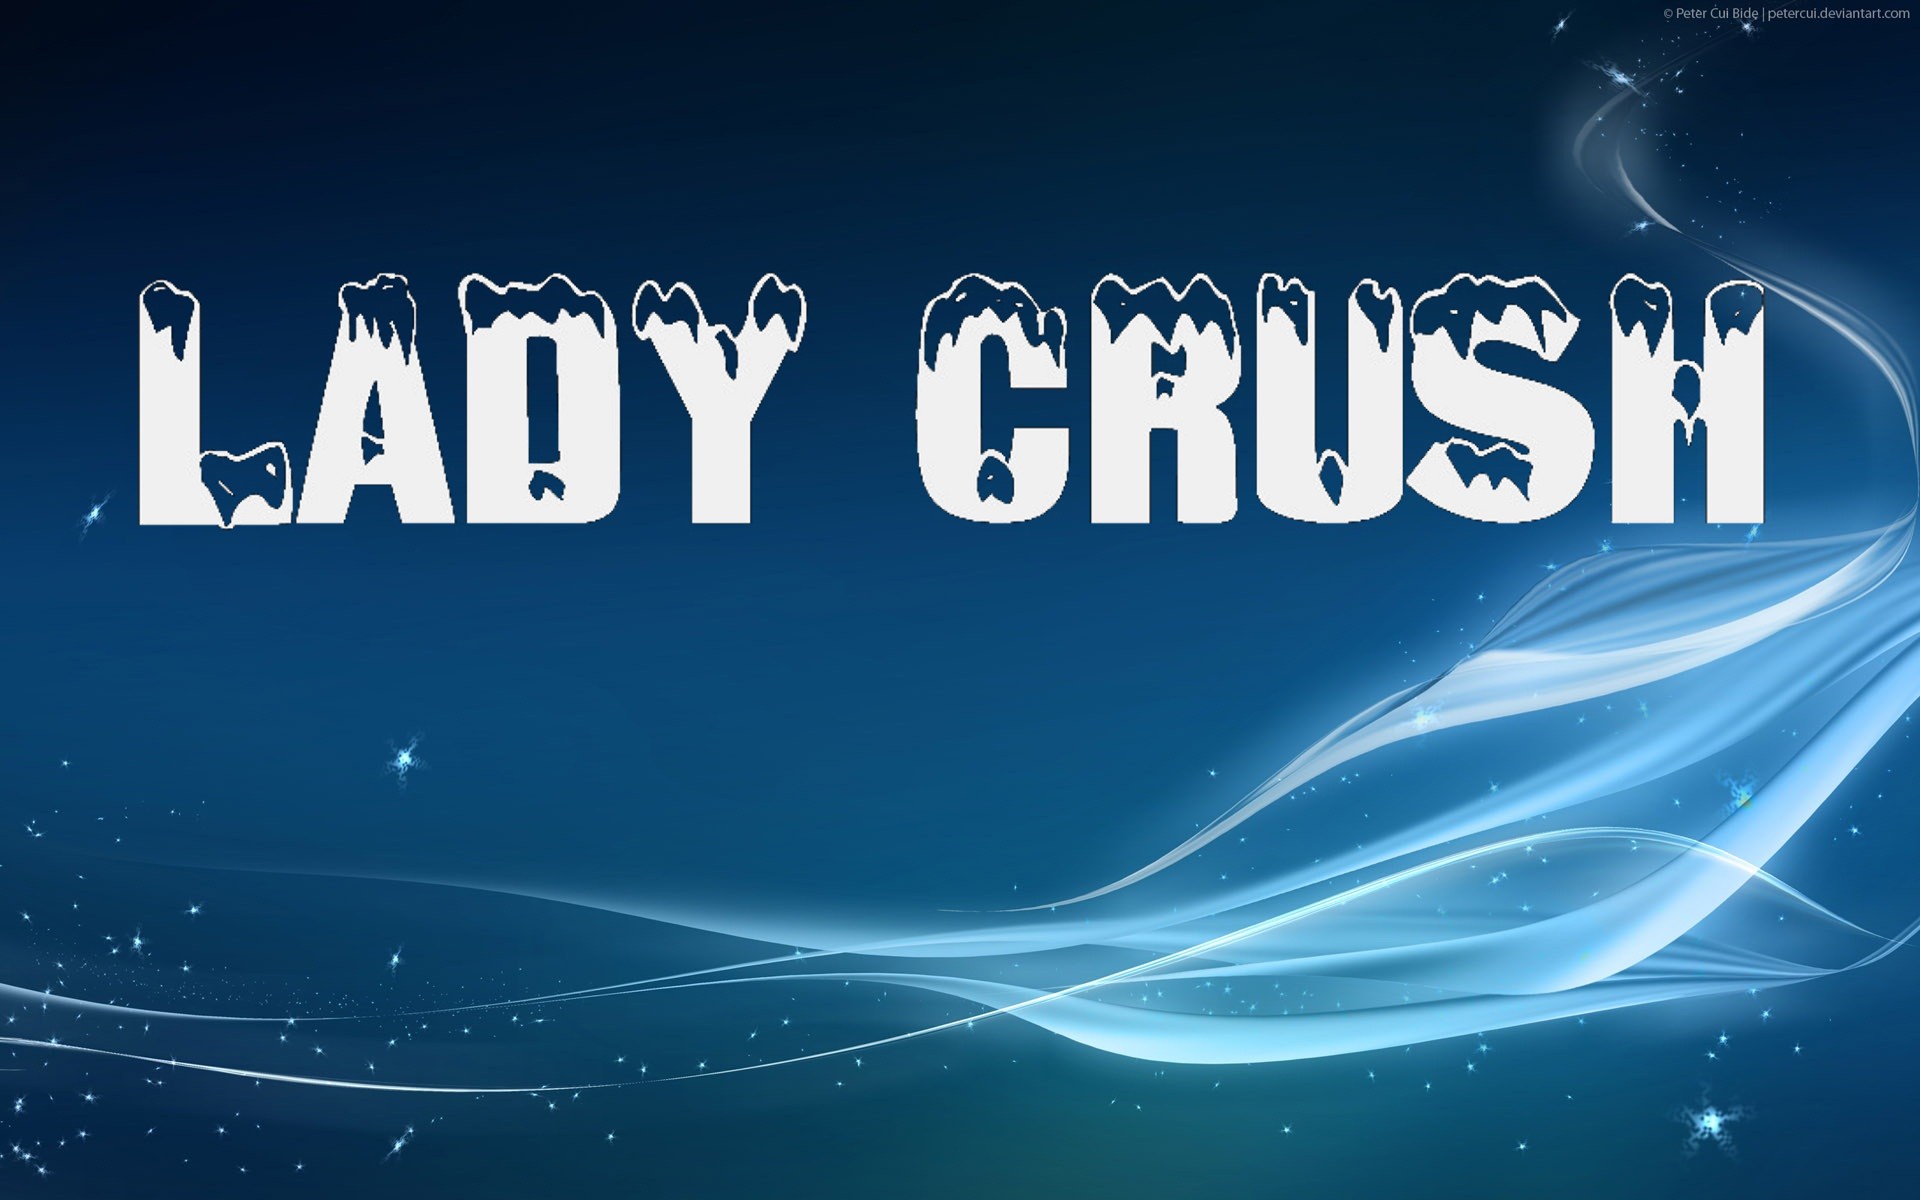  Lady Crush – “She No Lie, She On Fire” (Feat. BangaBoy & Castle)